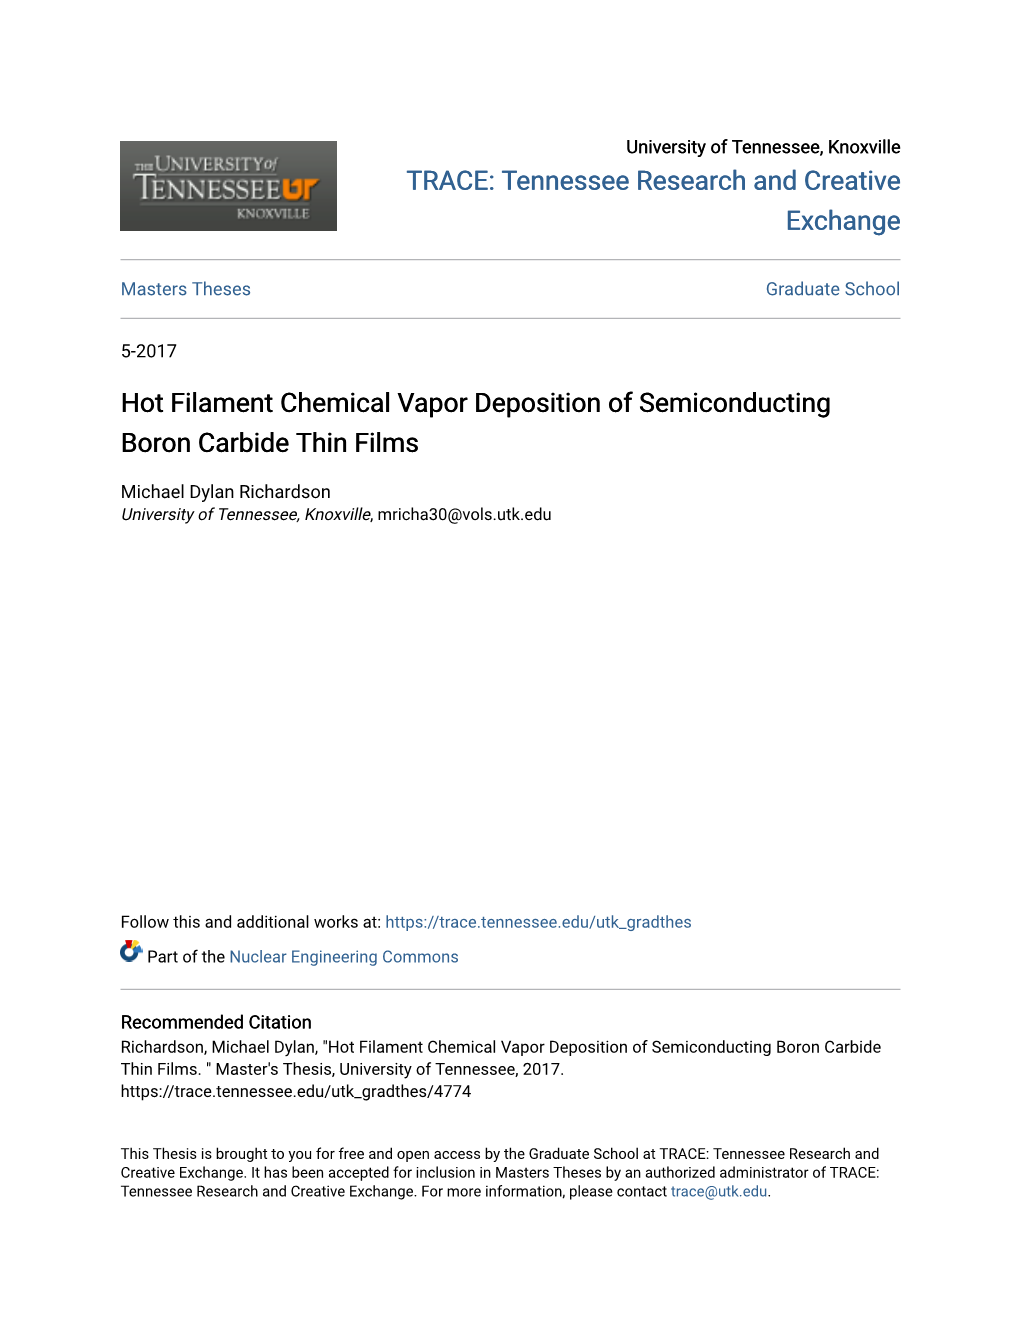 Hot Filament Chemical Vapor Deposition of Semiconducting Boron Carbide Thin Films